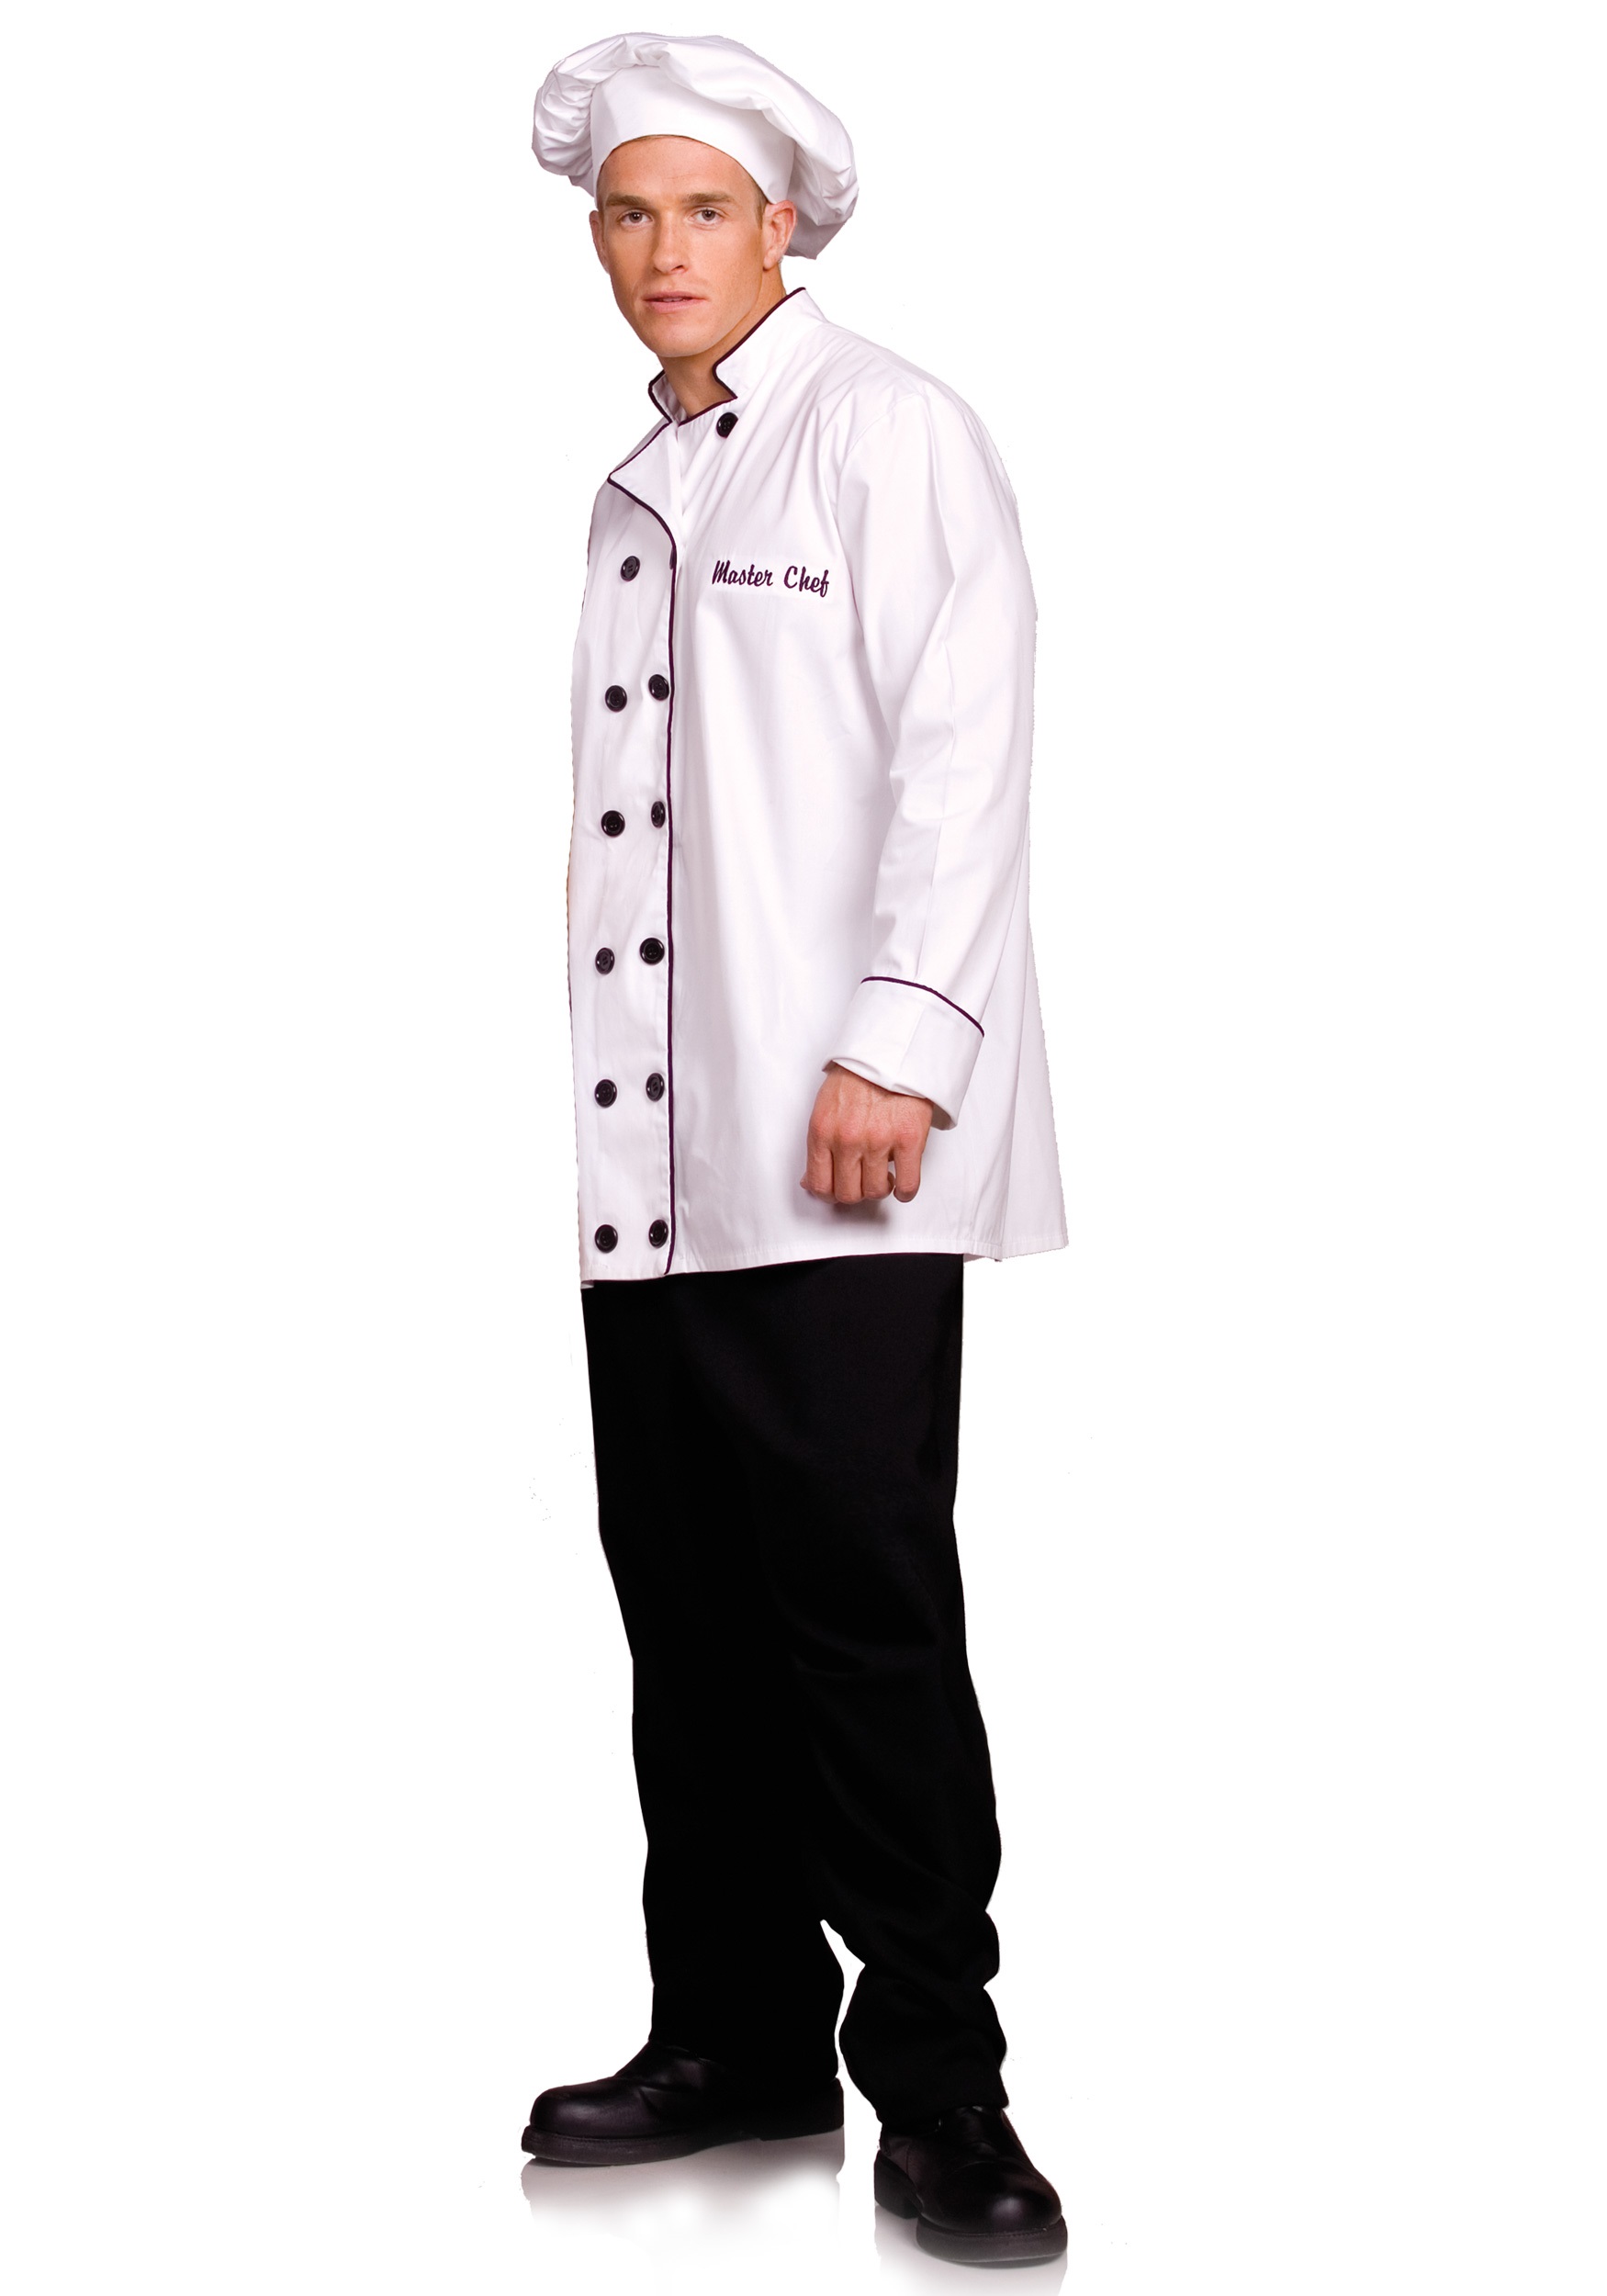 Plus Size Adult Master Chef Costume